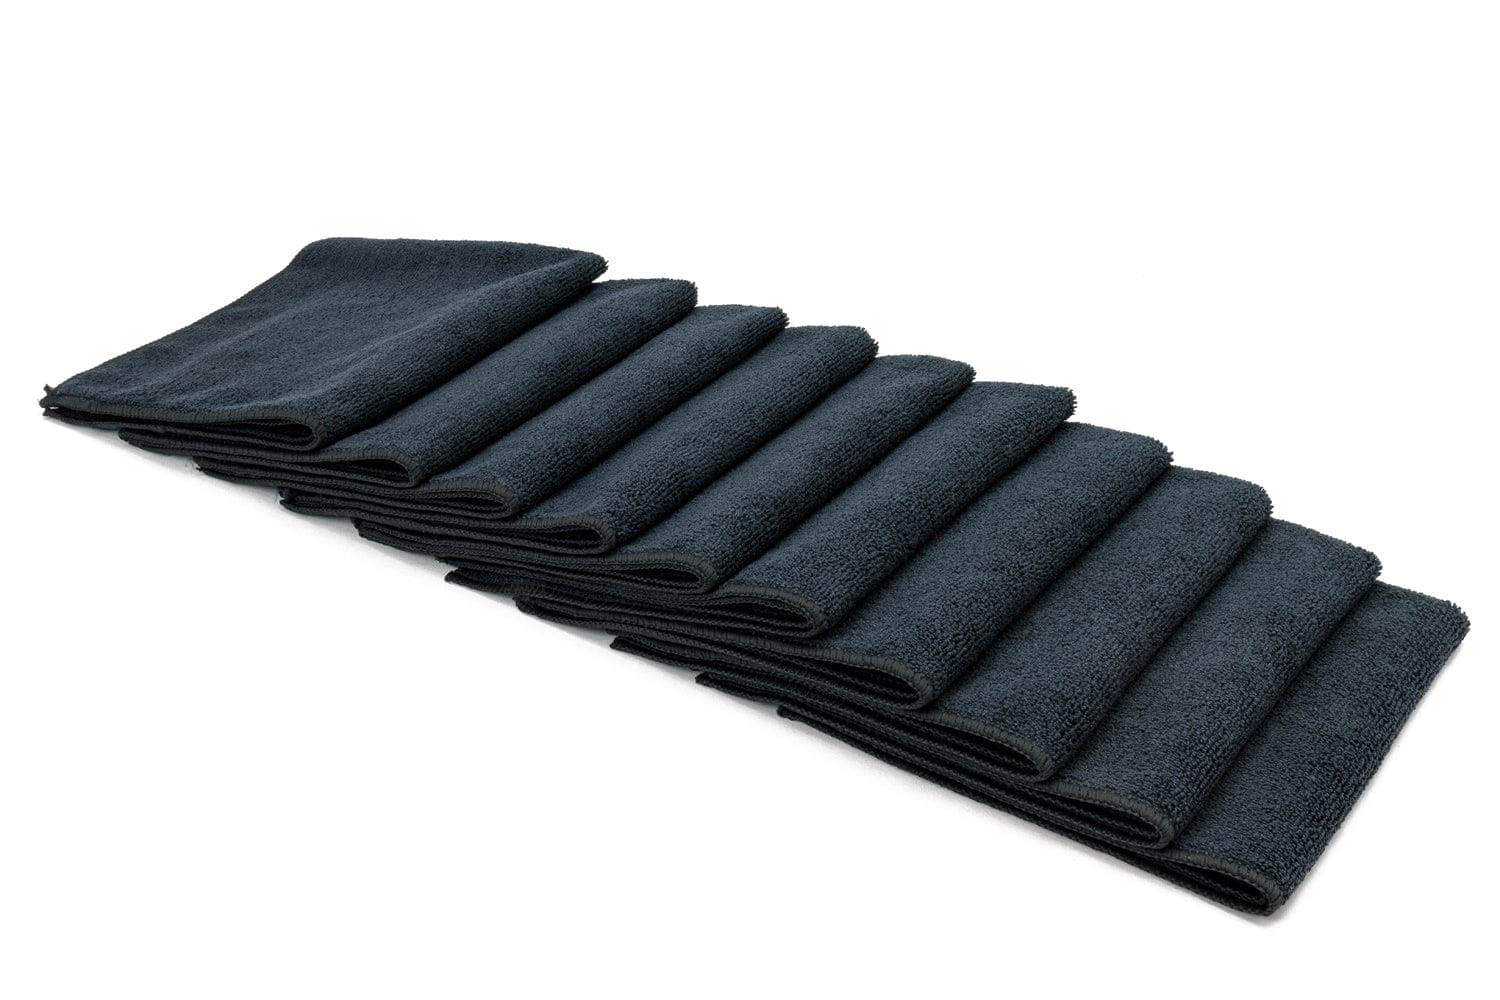 Autofiber Black / Stitched [Utility 300] All-Purpose Edgeless Microfiber Towel (16 in x 16 in., 300 gsm) 10pack